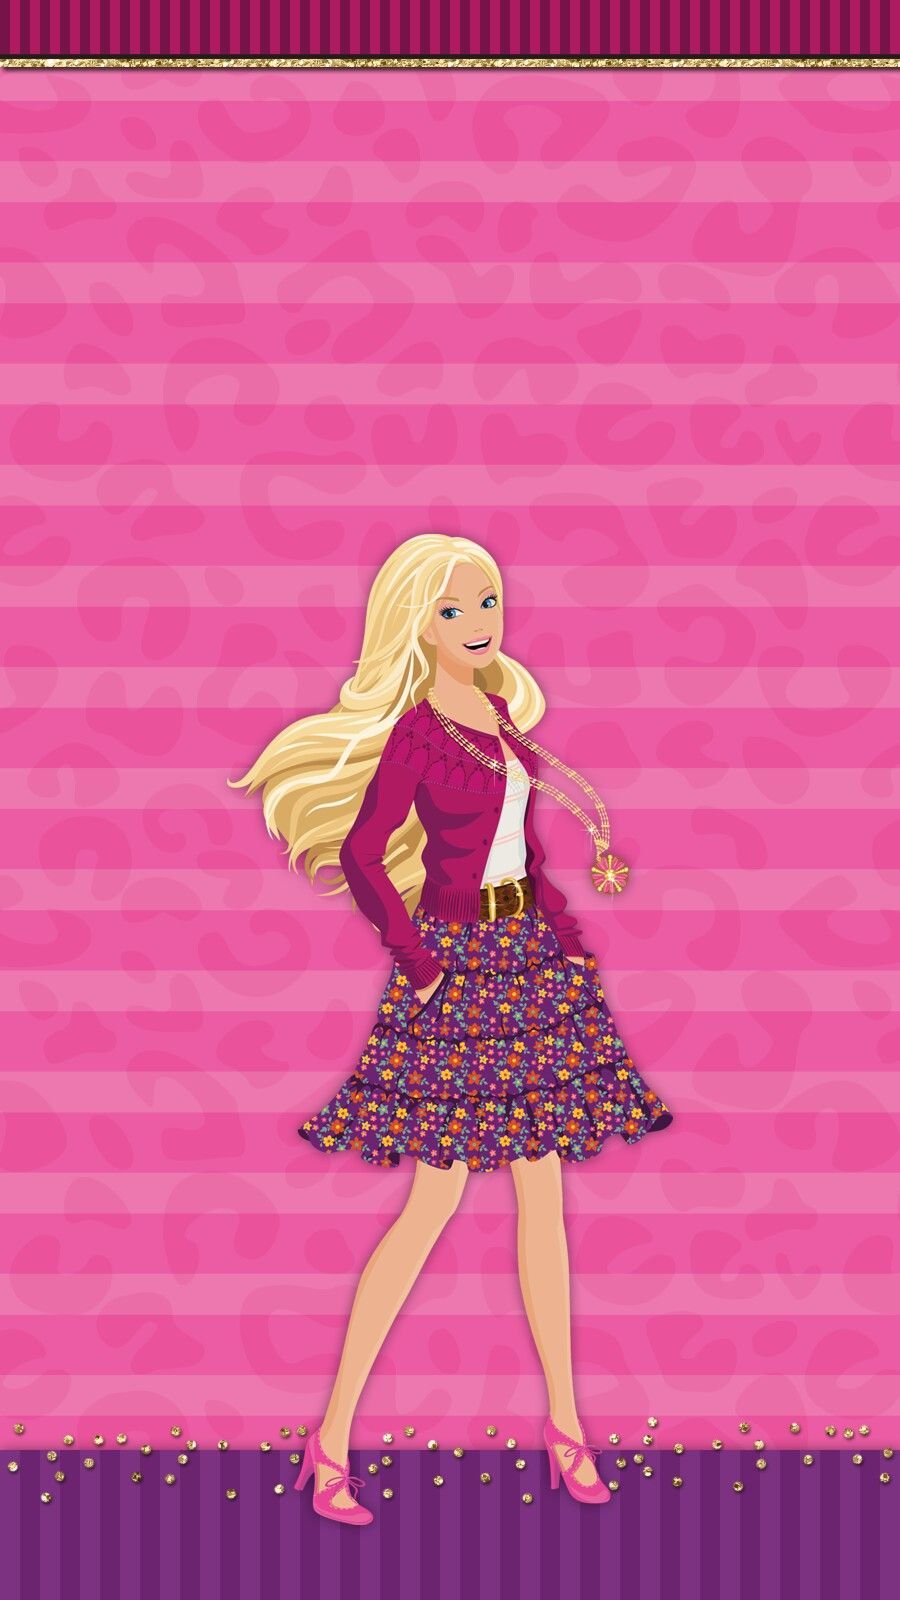 Barbie Wallpaper iPhone Pink Wallpaper iPhone Wallpaper & Background Download